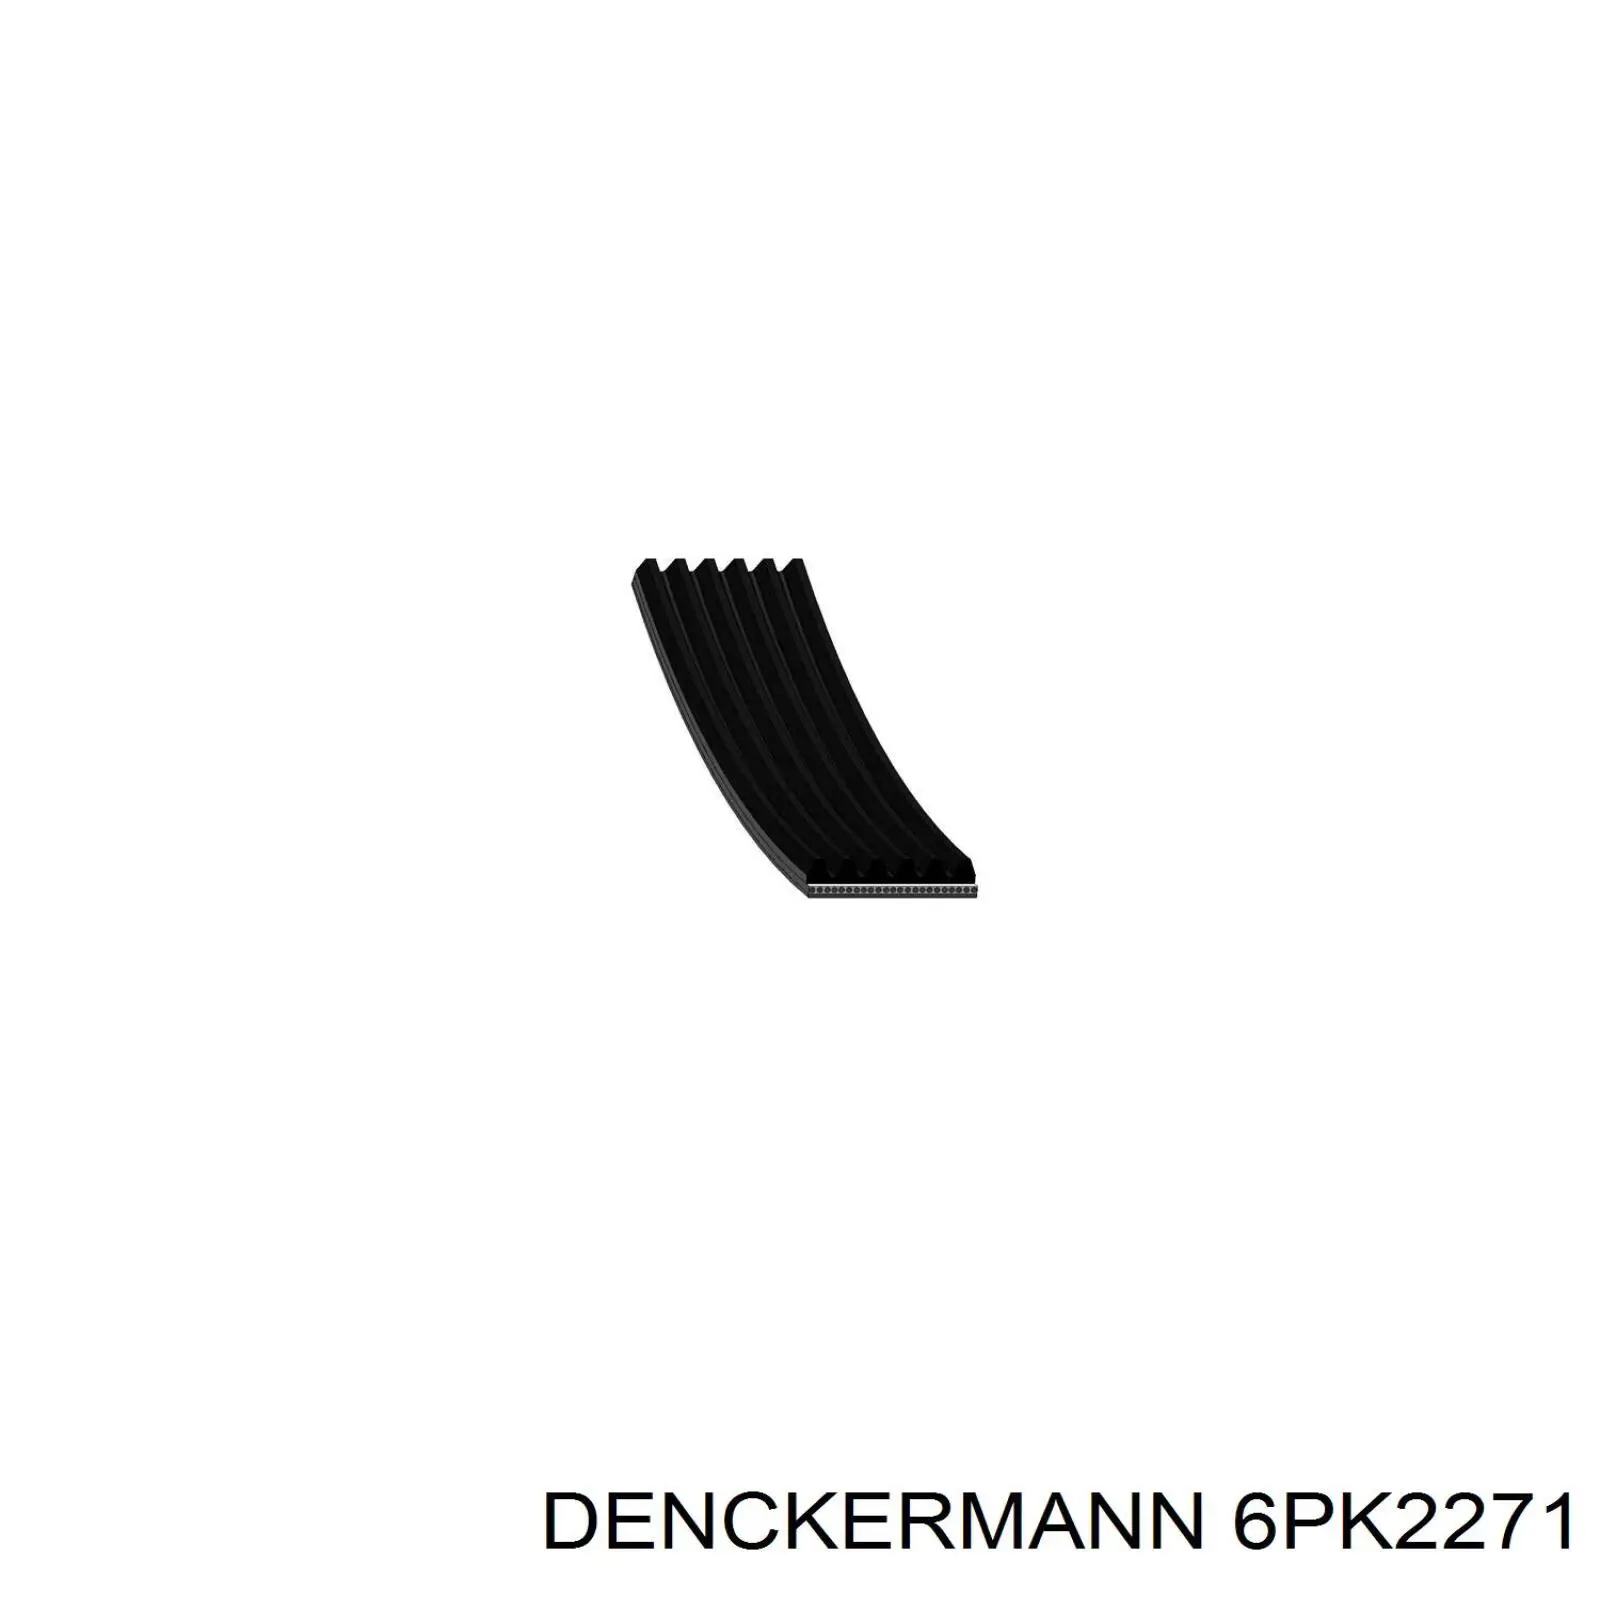 6PK2271 Denckermann correa trapezoidal